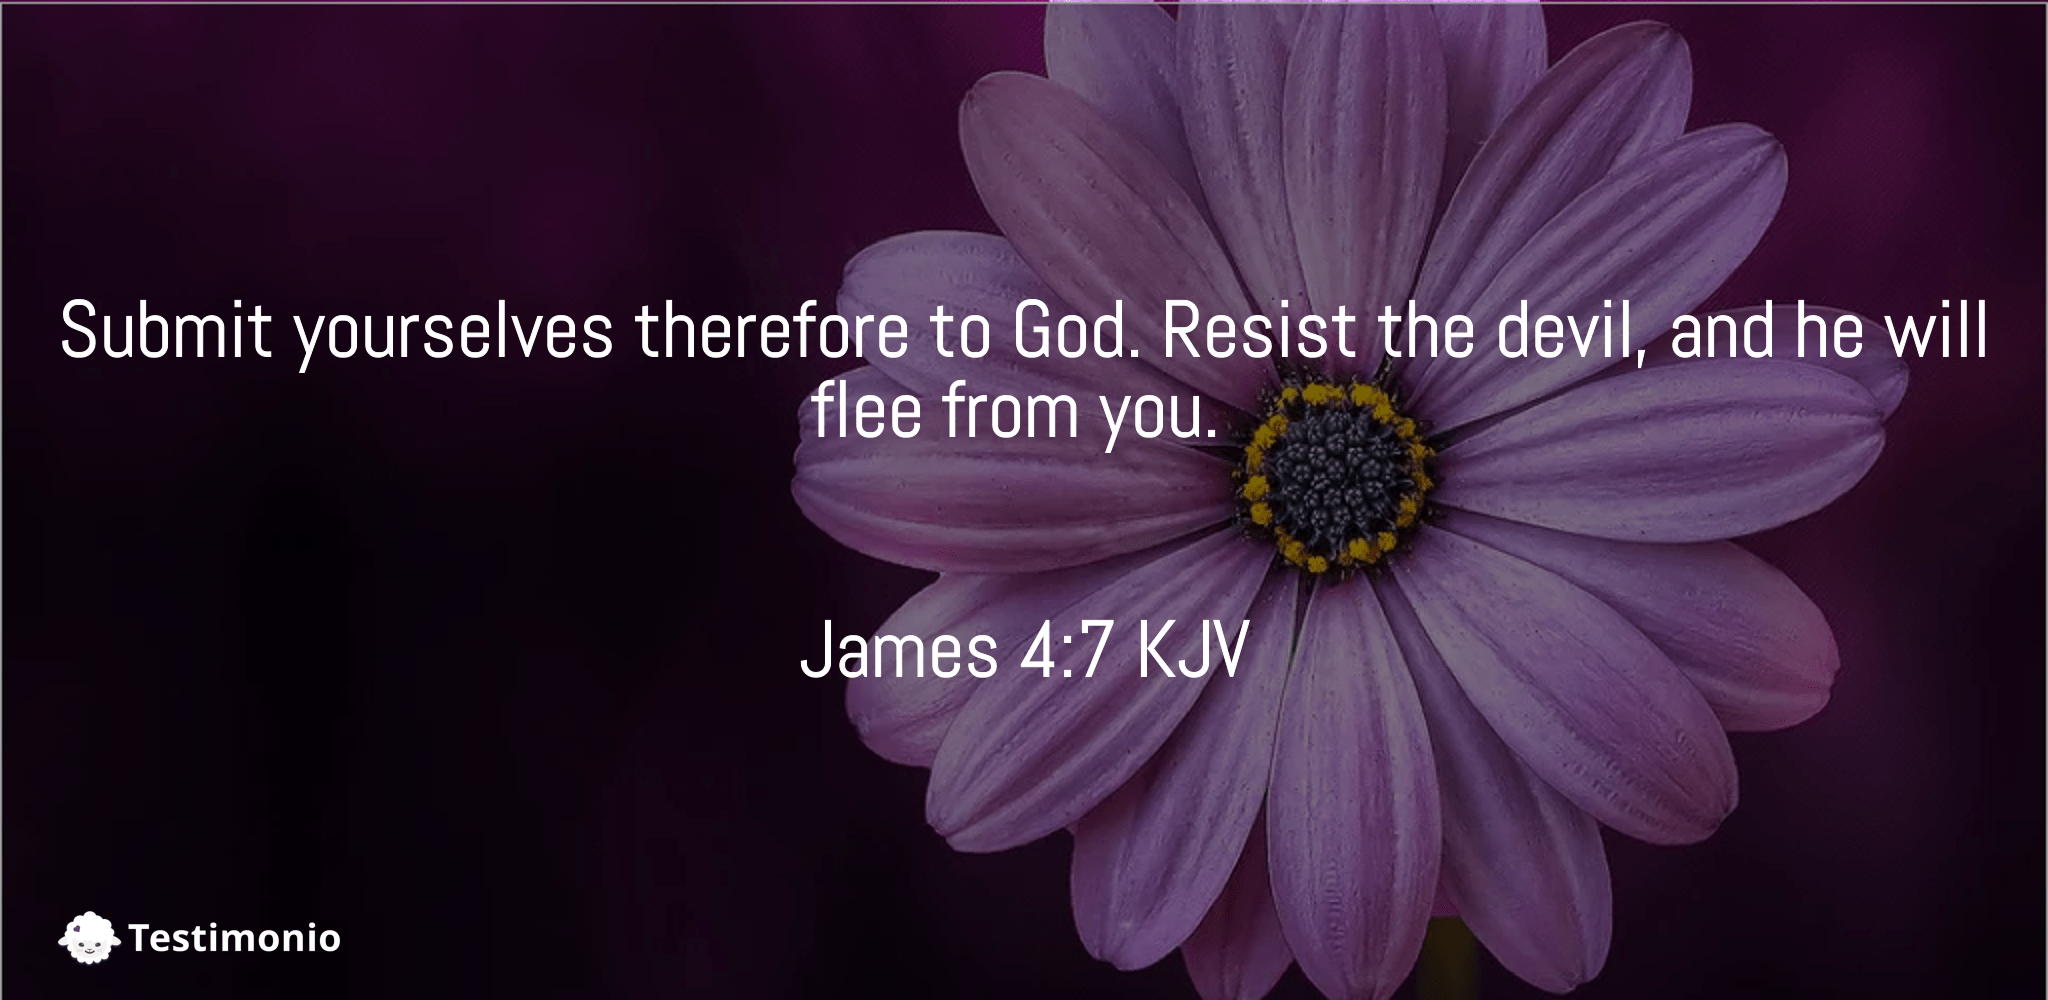 James 4:7